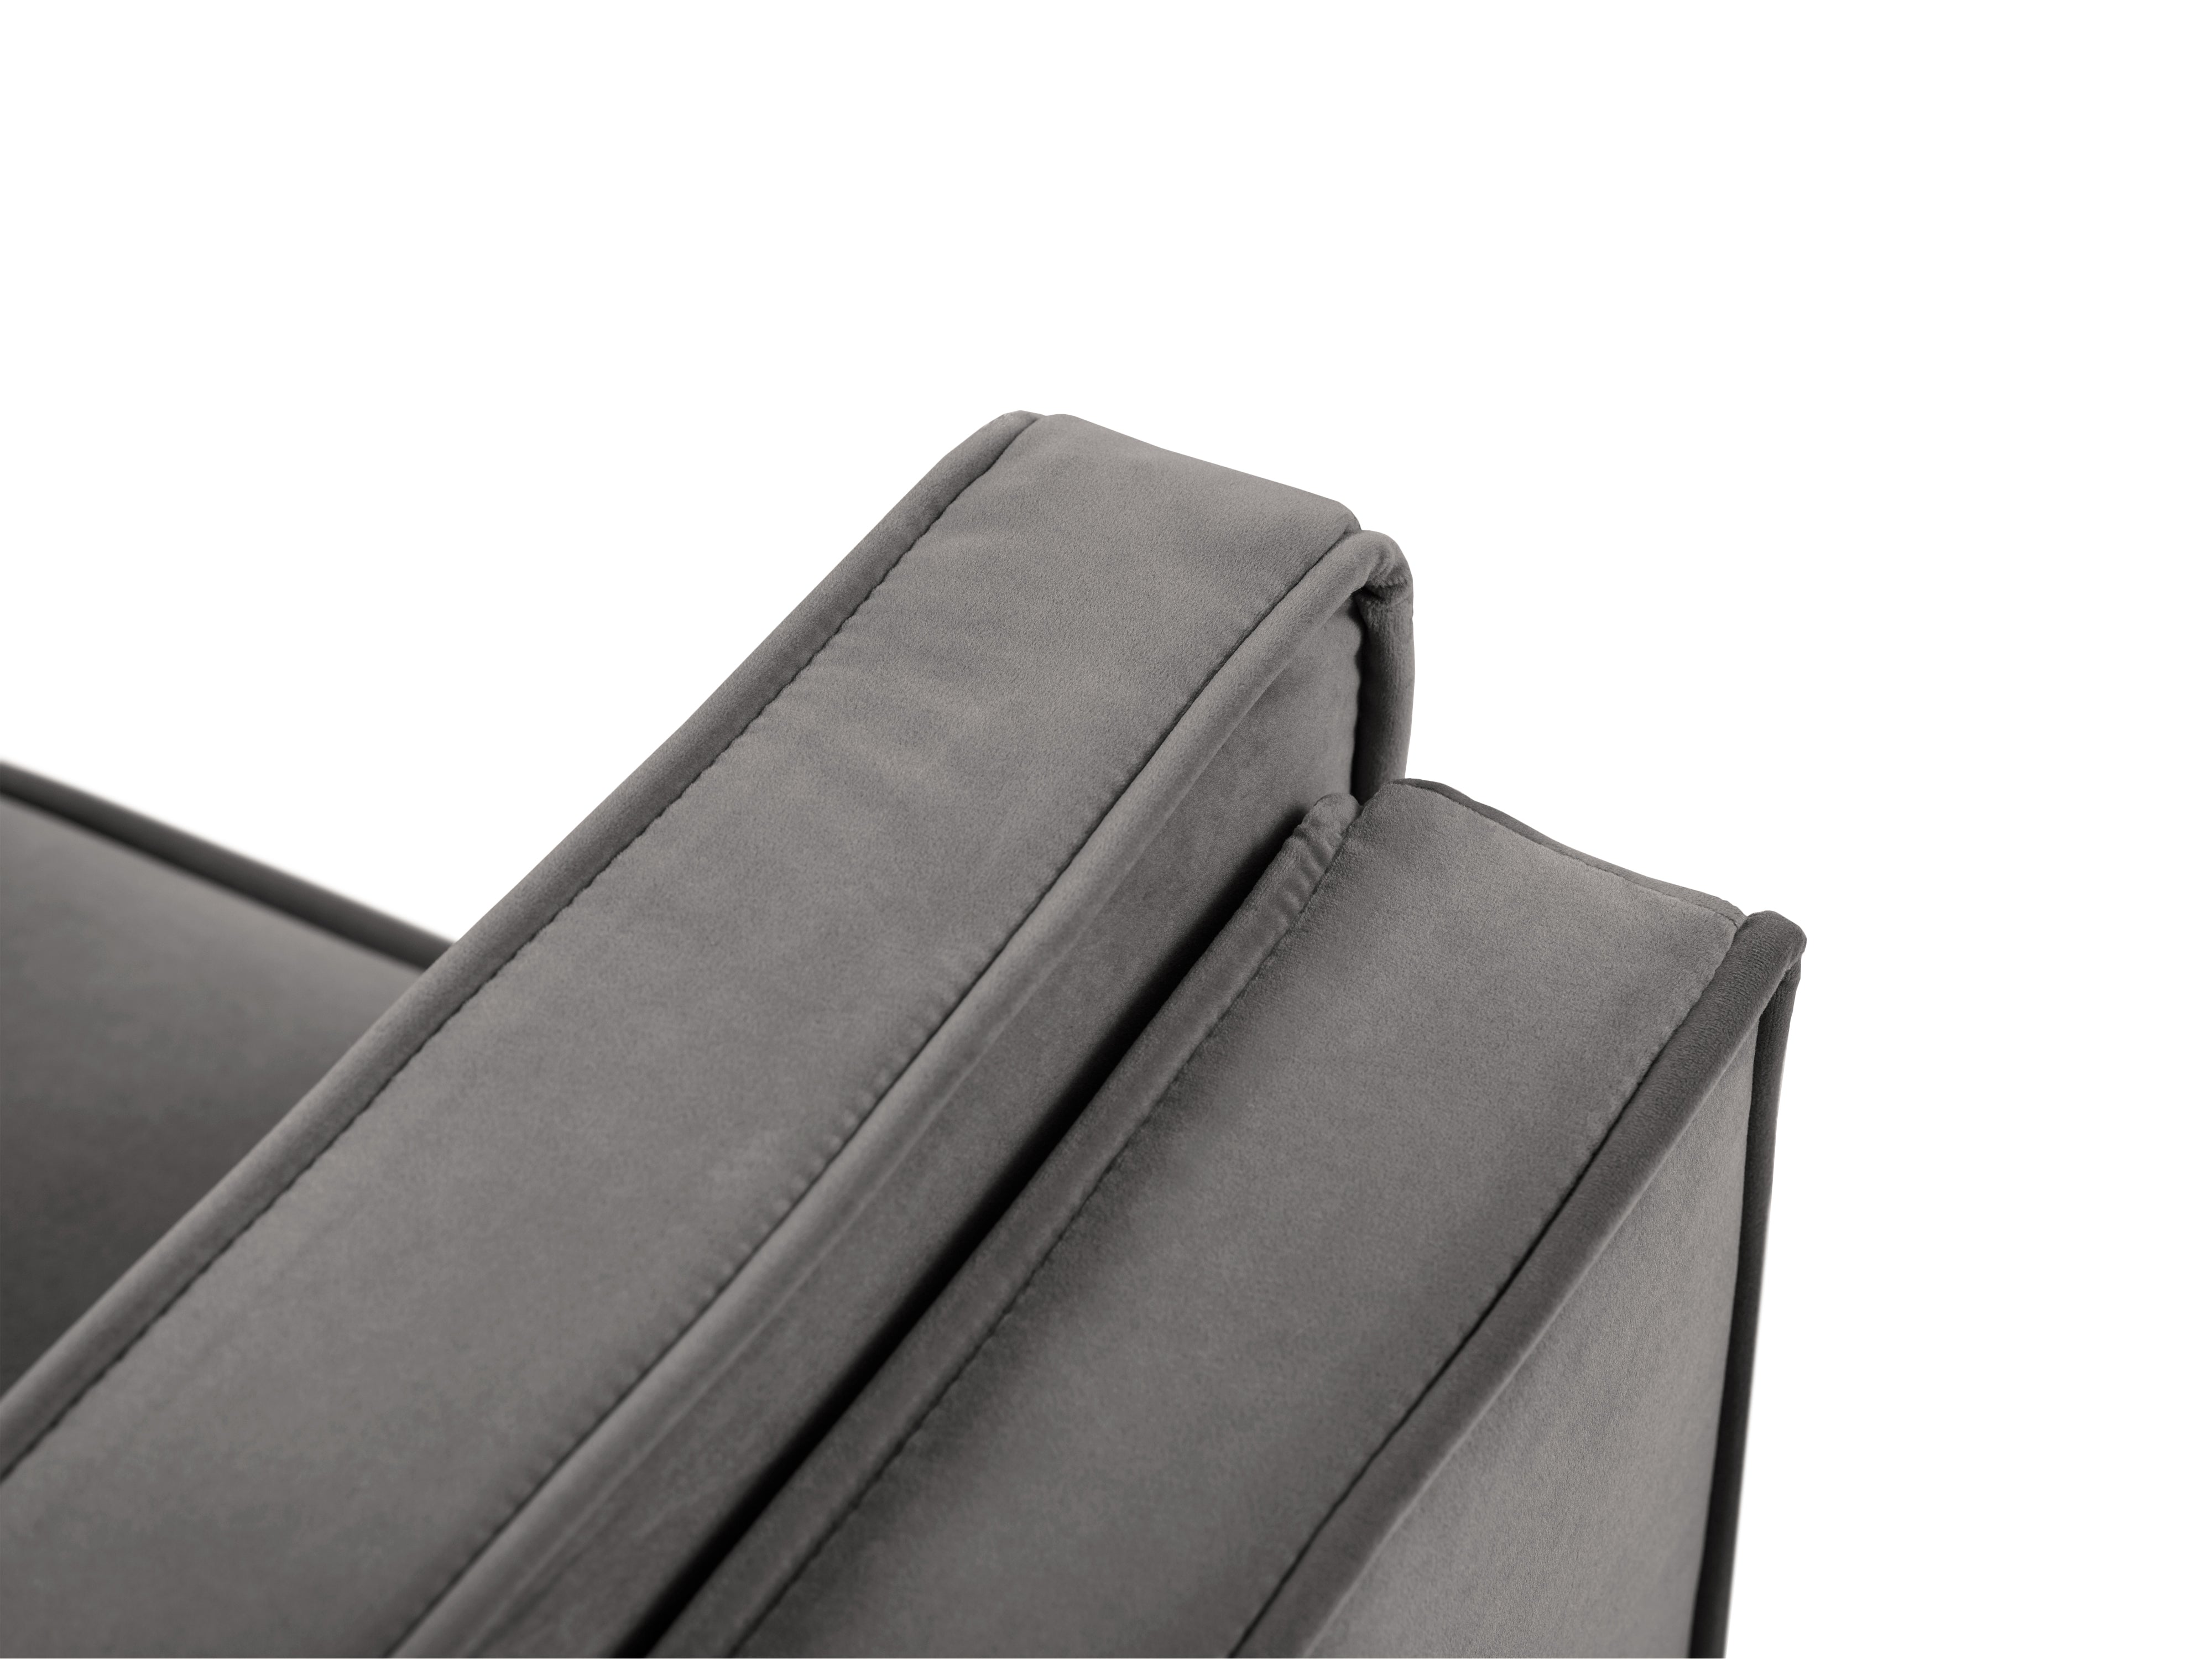 LUIS light grey velvet 4-seater sofa with black base